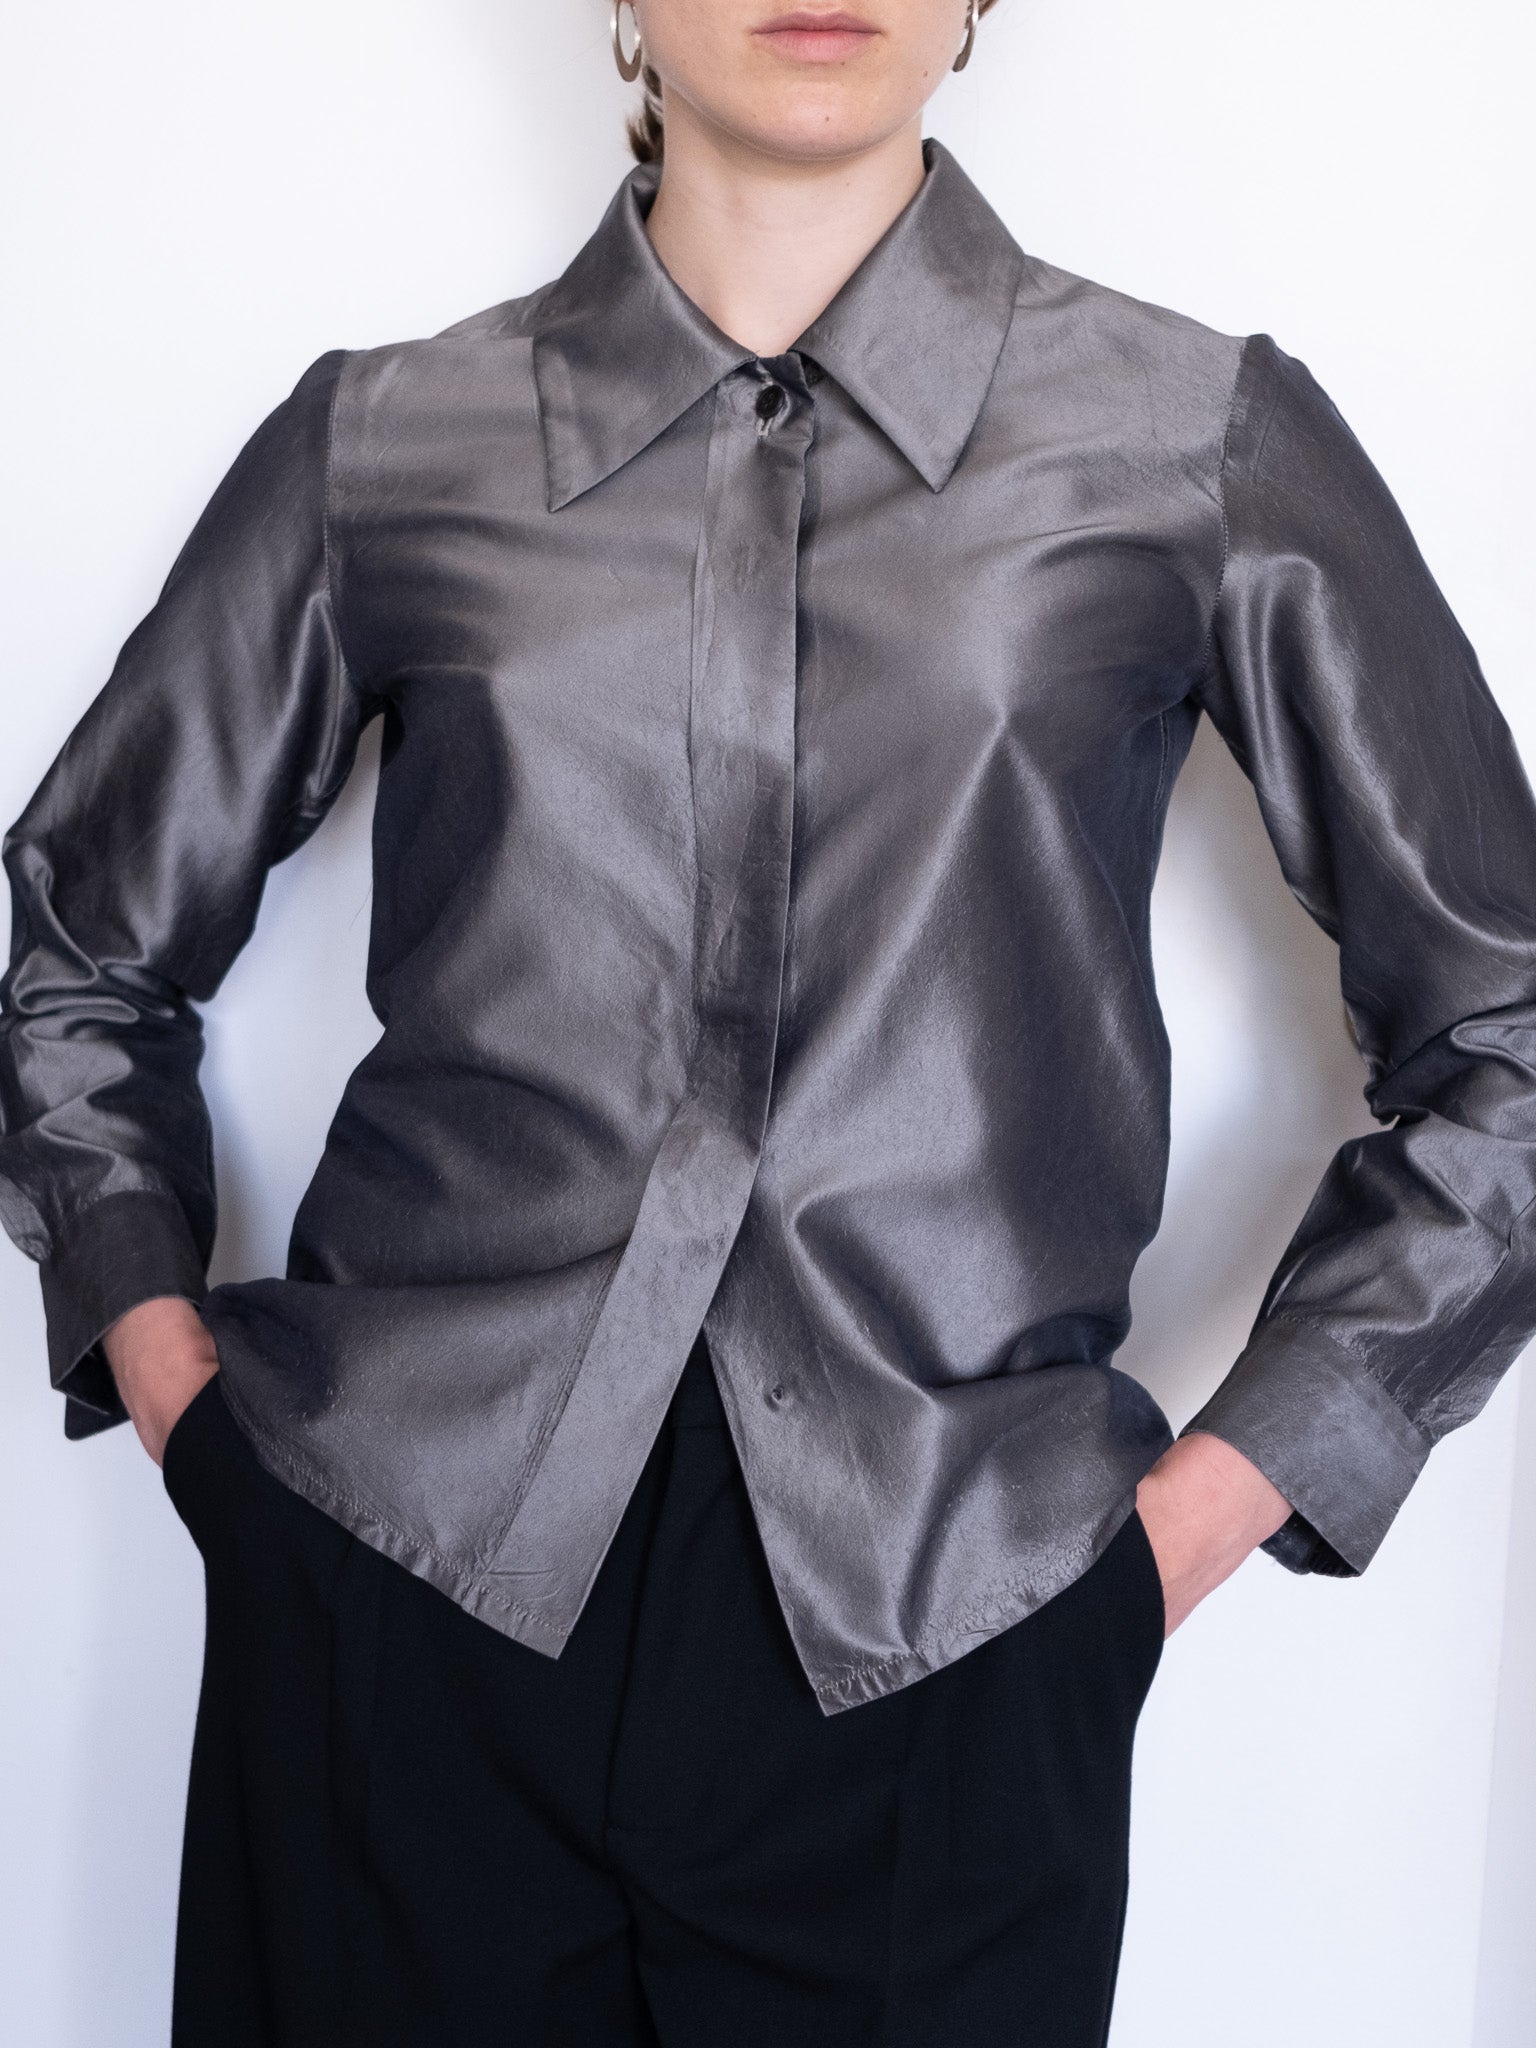 90's Yves Saint Laurent silk shirt